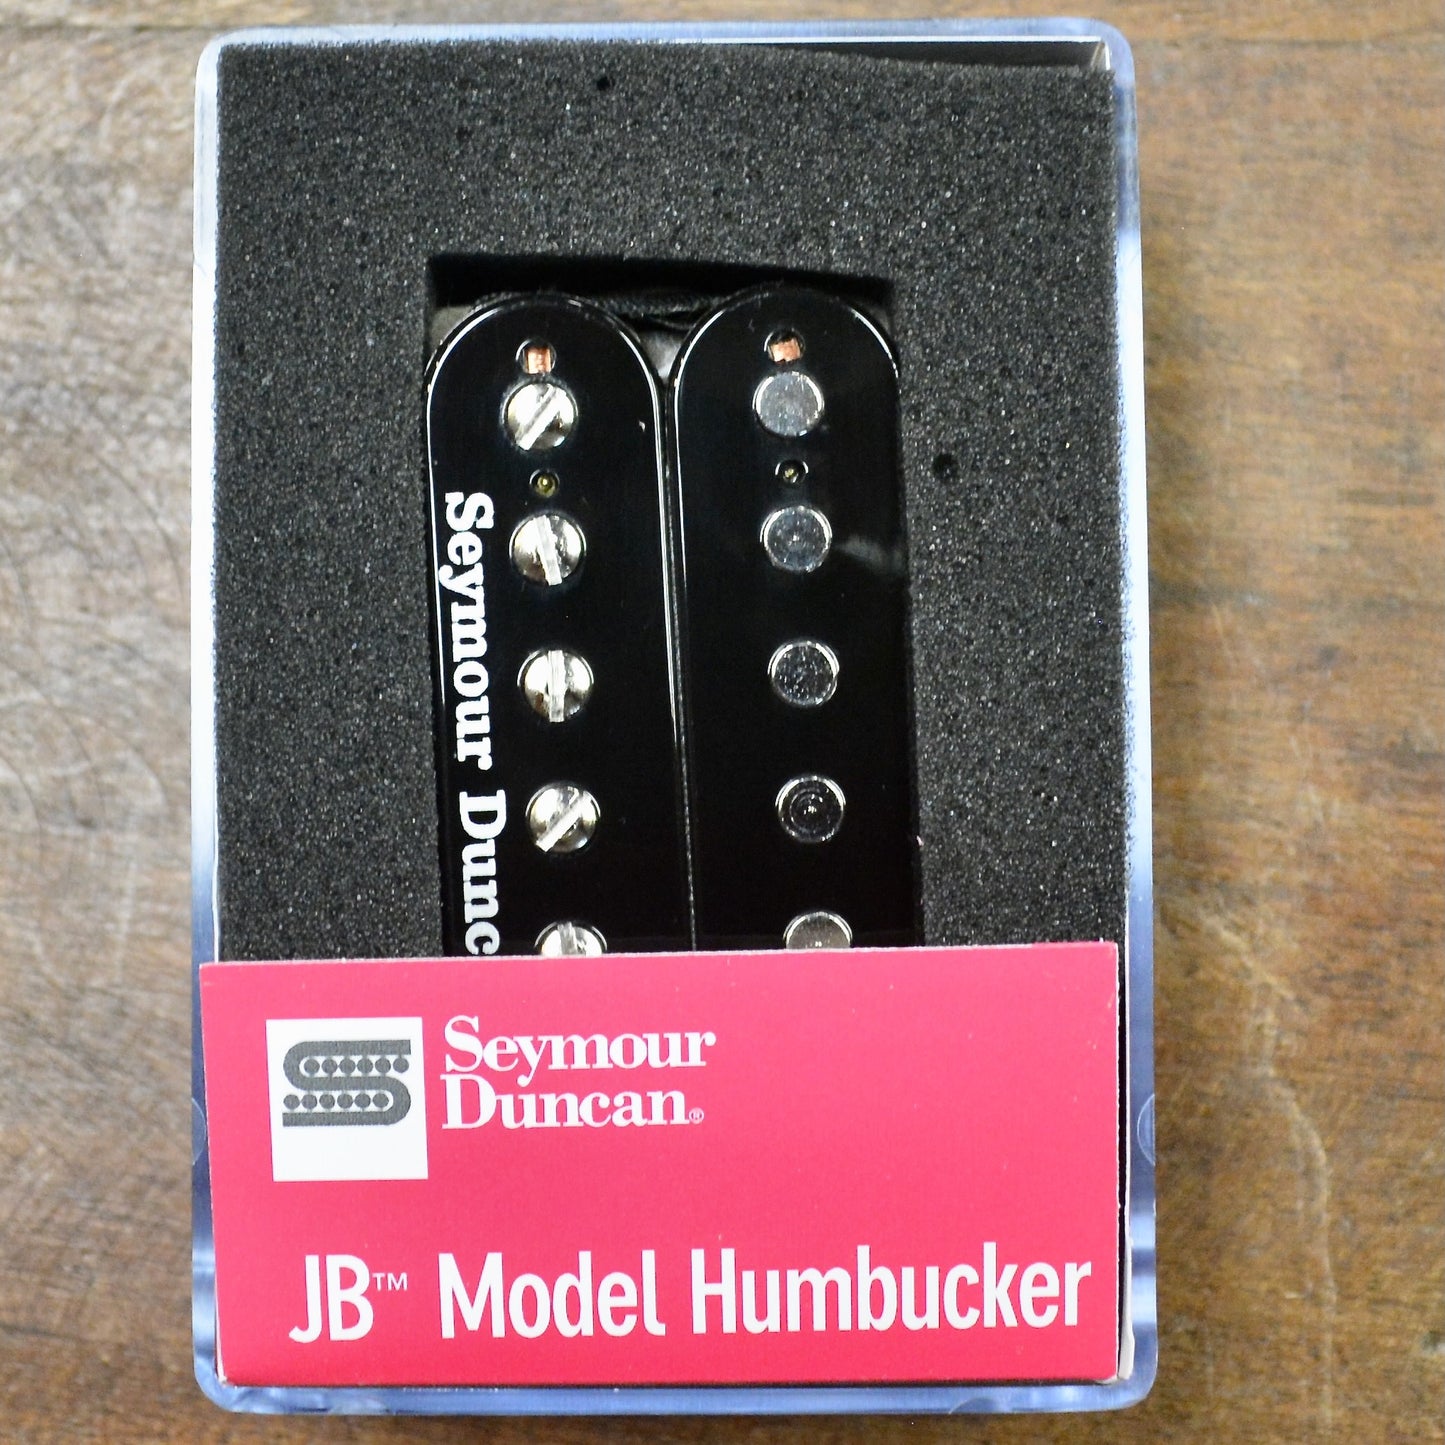 Seymour Duncan JB Model Humbucker